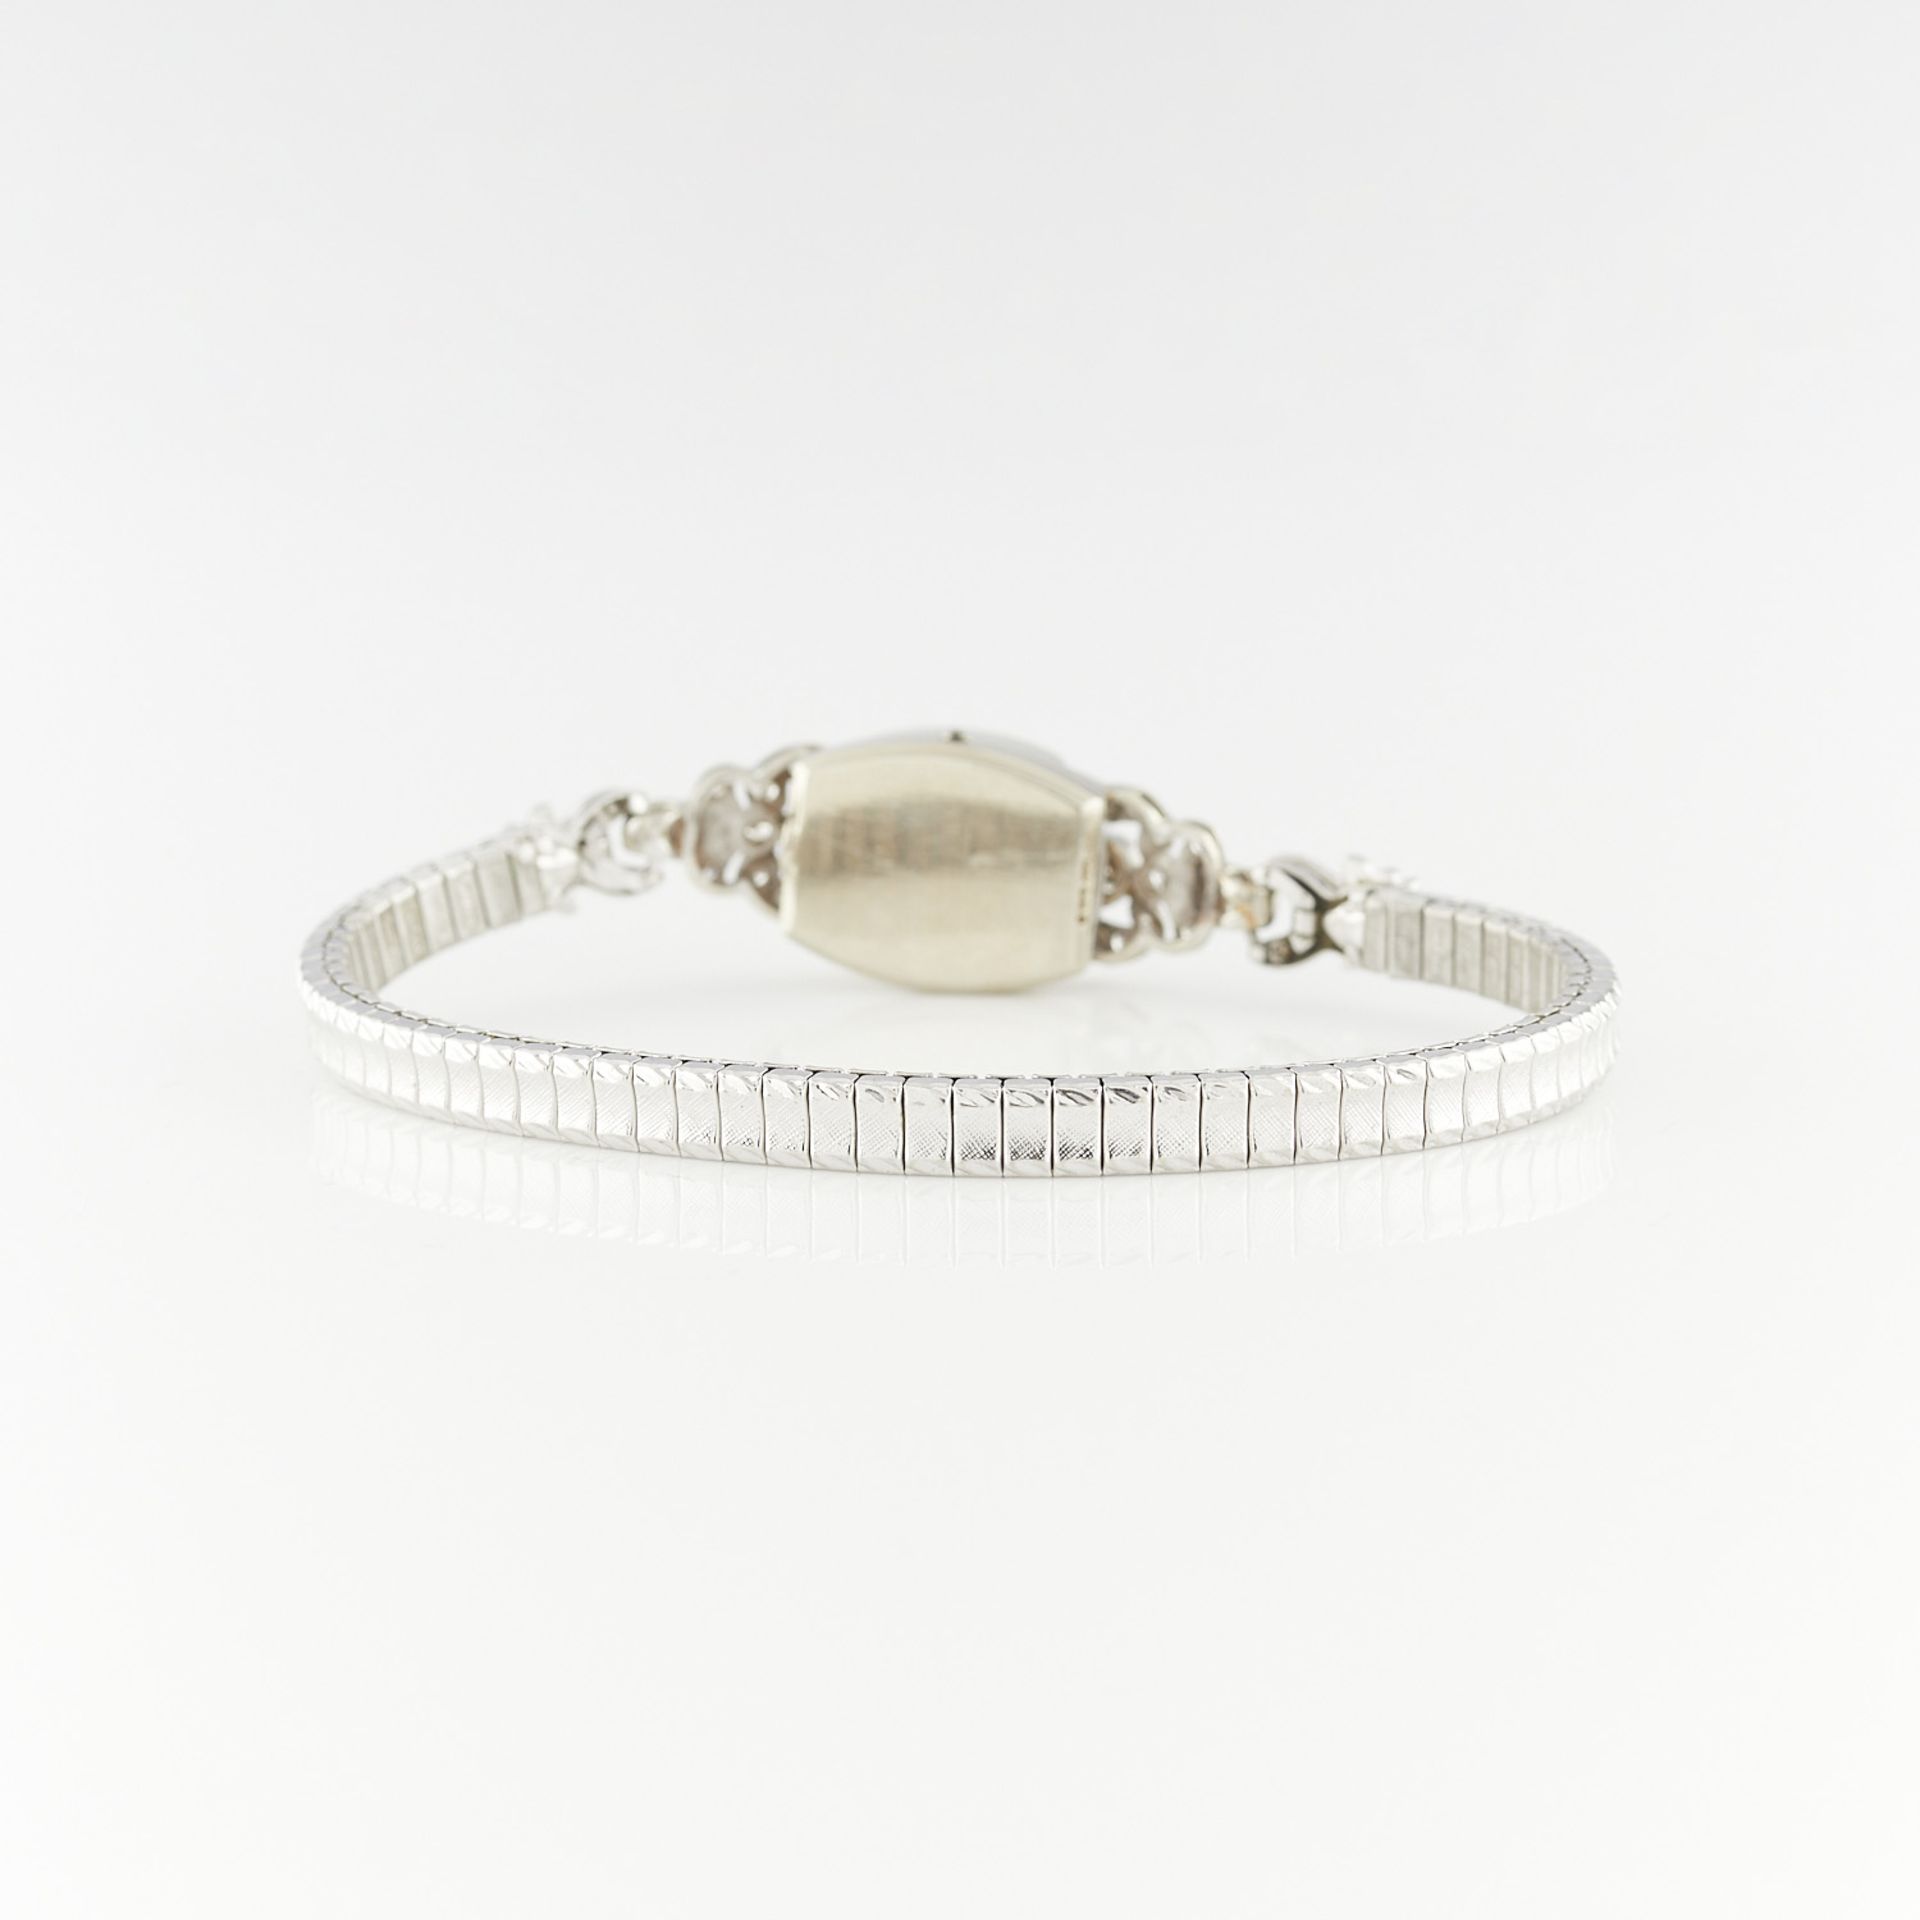 14k Gold Ladies' Hamilton Wristwatch with Diamonds - Image 7 of 12